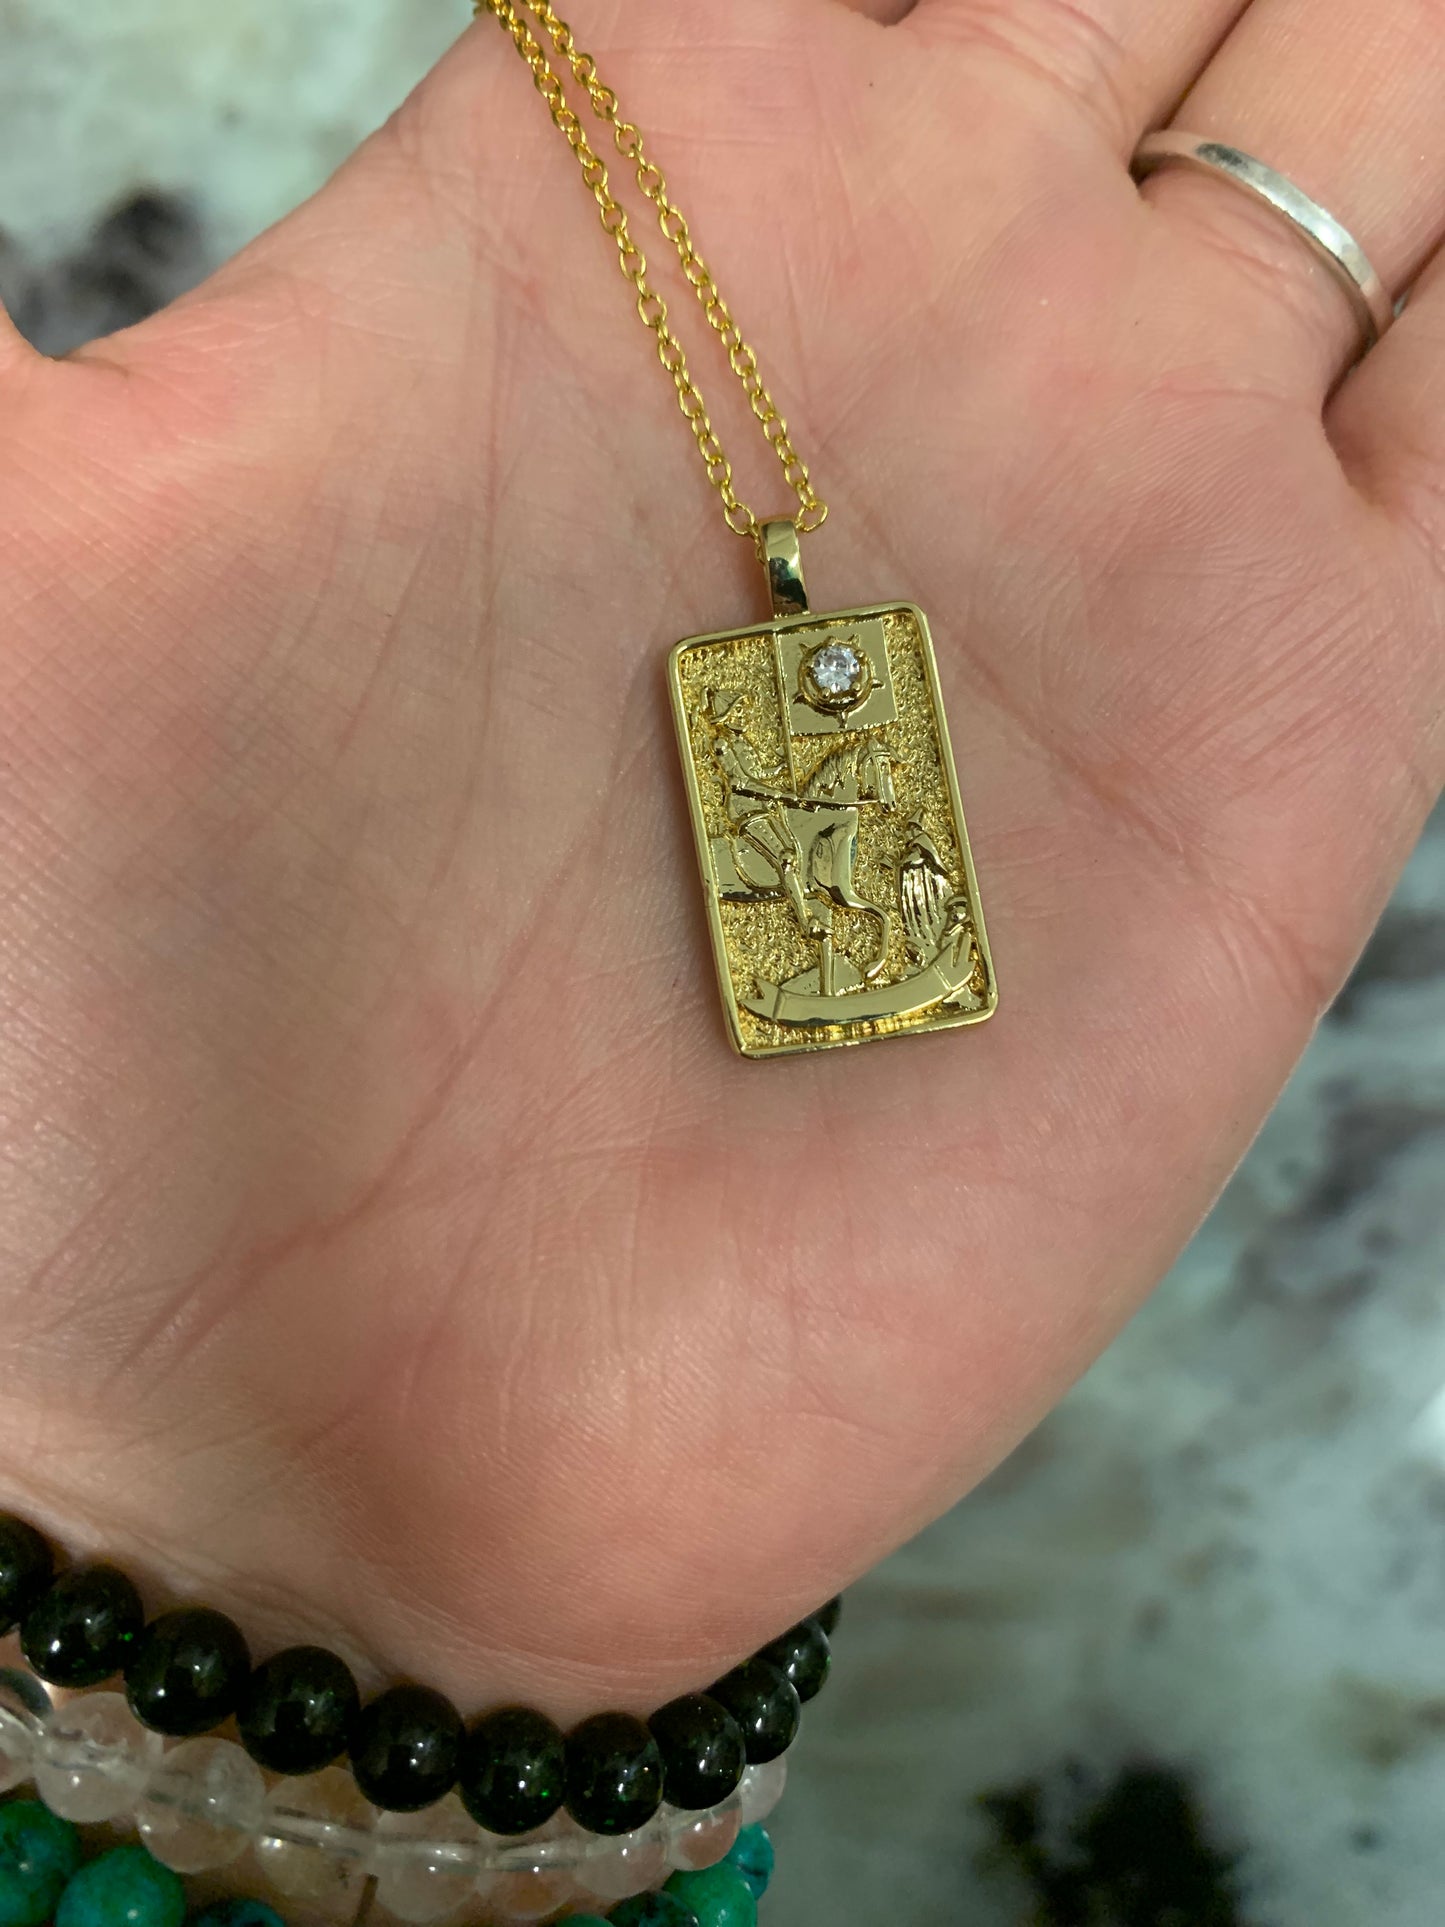 Tarot Major Arcana Pendant Necklace w Chain - Gold Plated